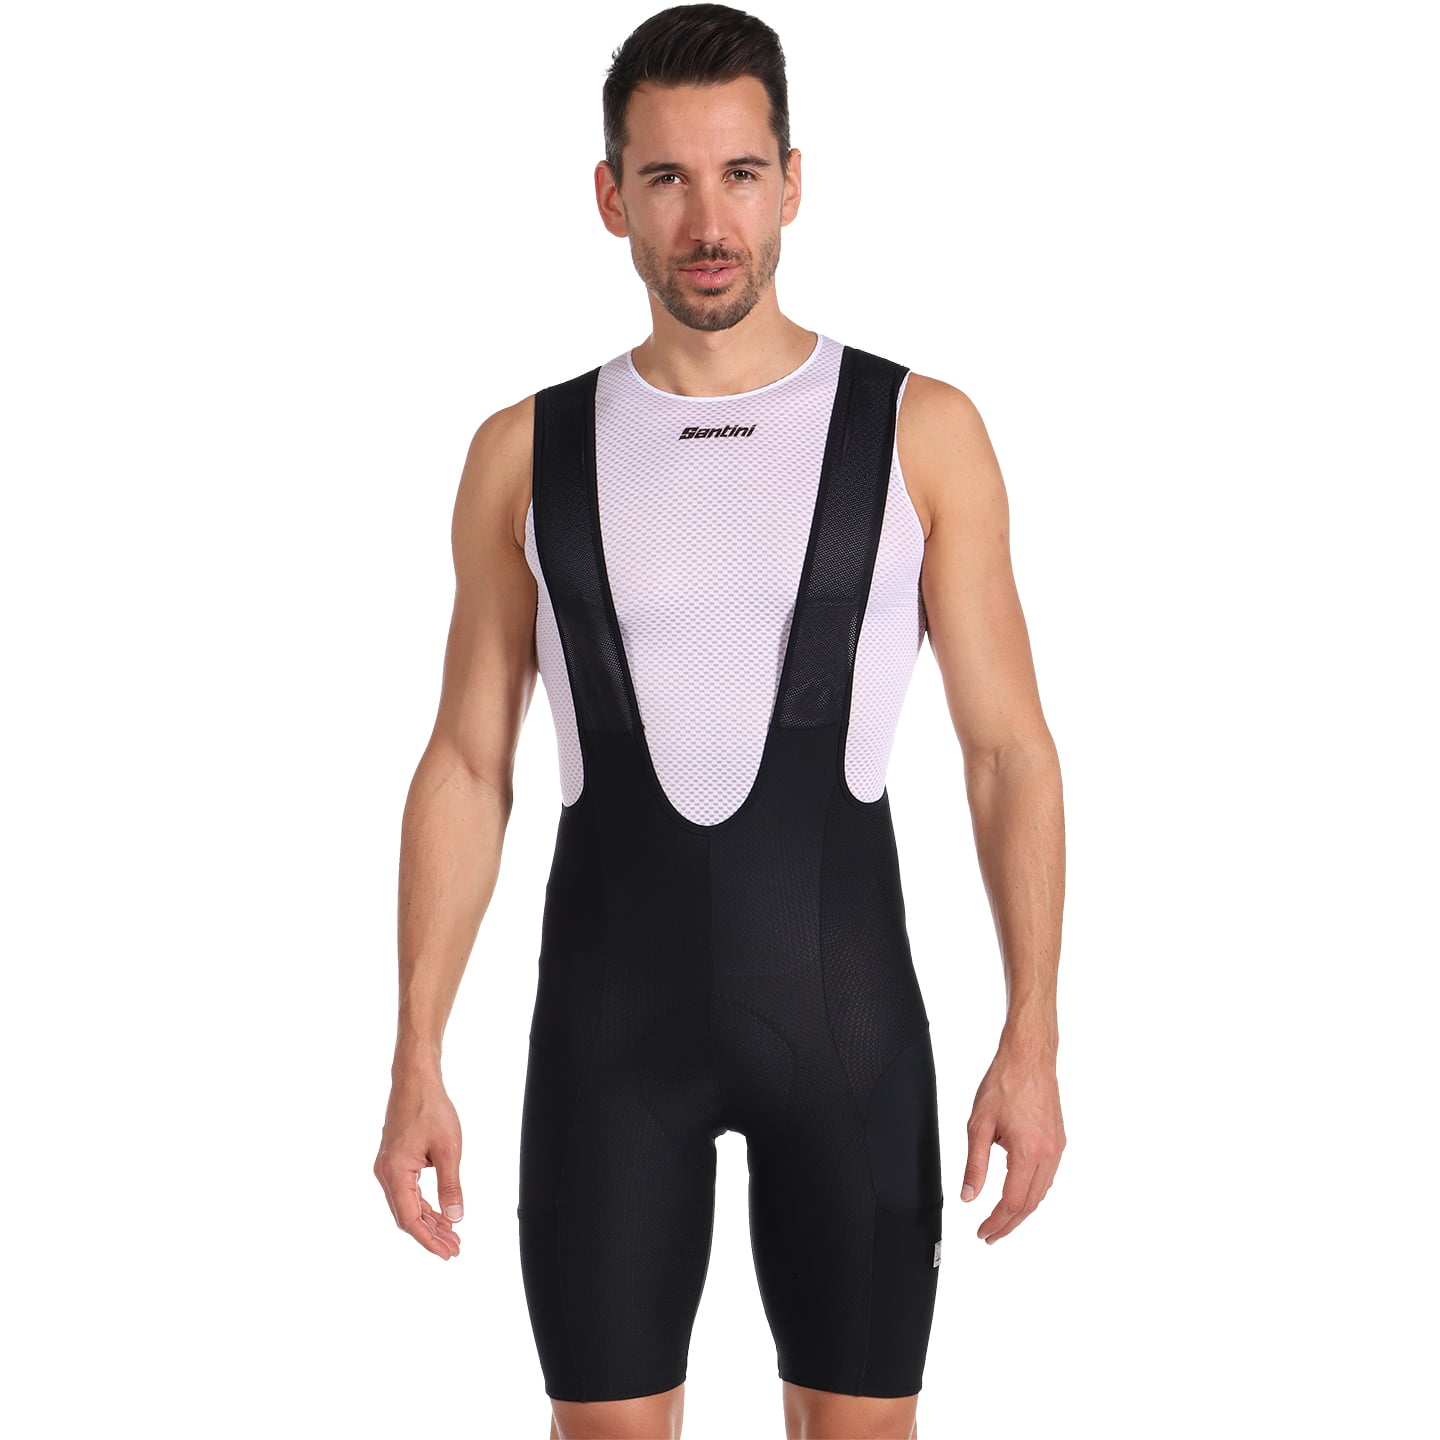 SANTINI Air Pro Gel 2 Gravel Bib Shorts Bib Shorts, for men, size 2XL, Cycle shorts, Cycling clothing